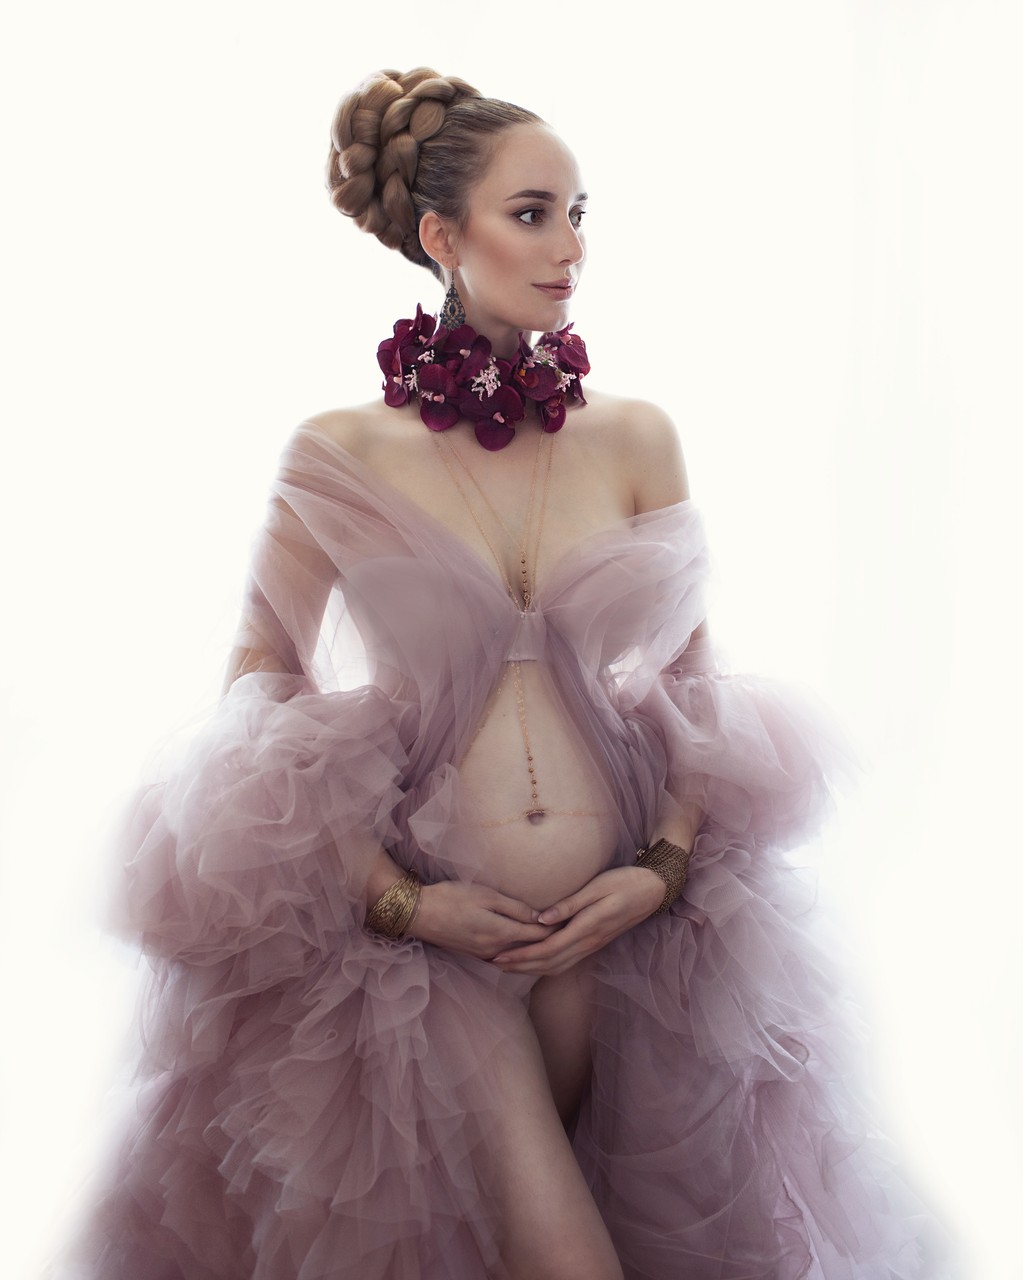 Amsterdam Pregnancy Photoshoot Rose Tulle Dress Bettina